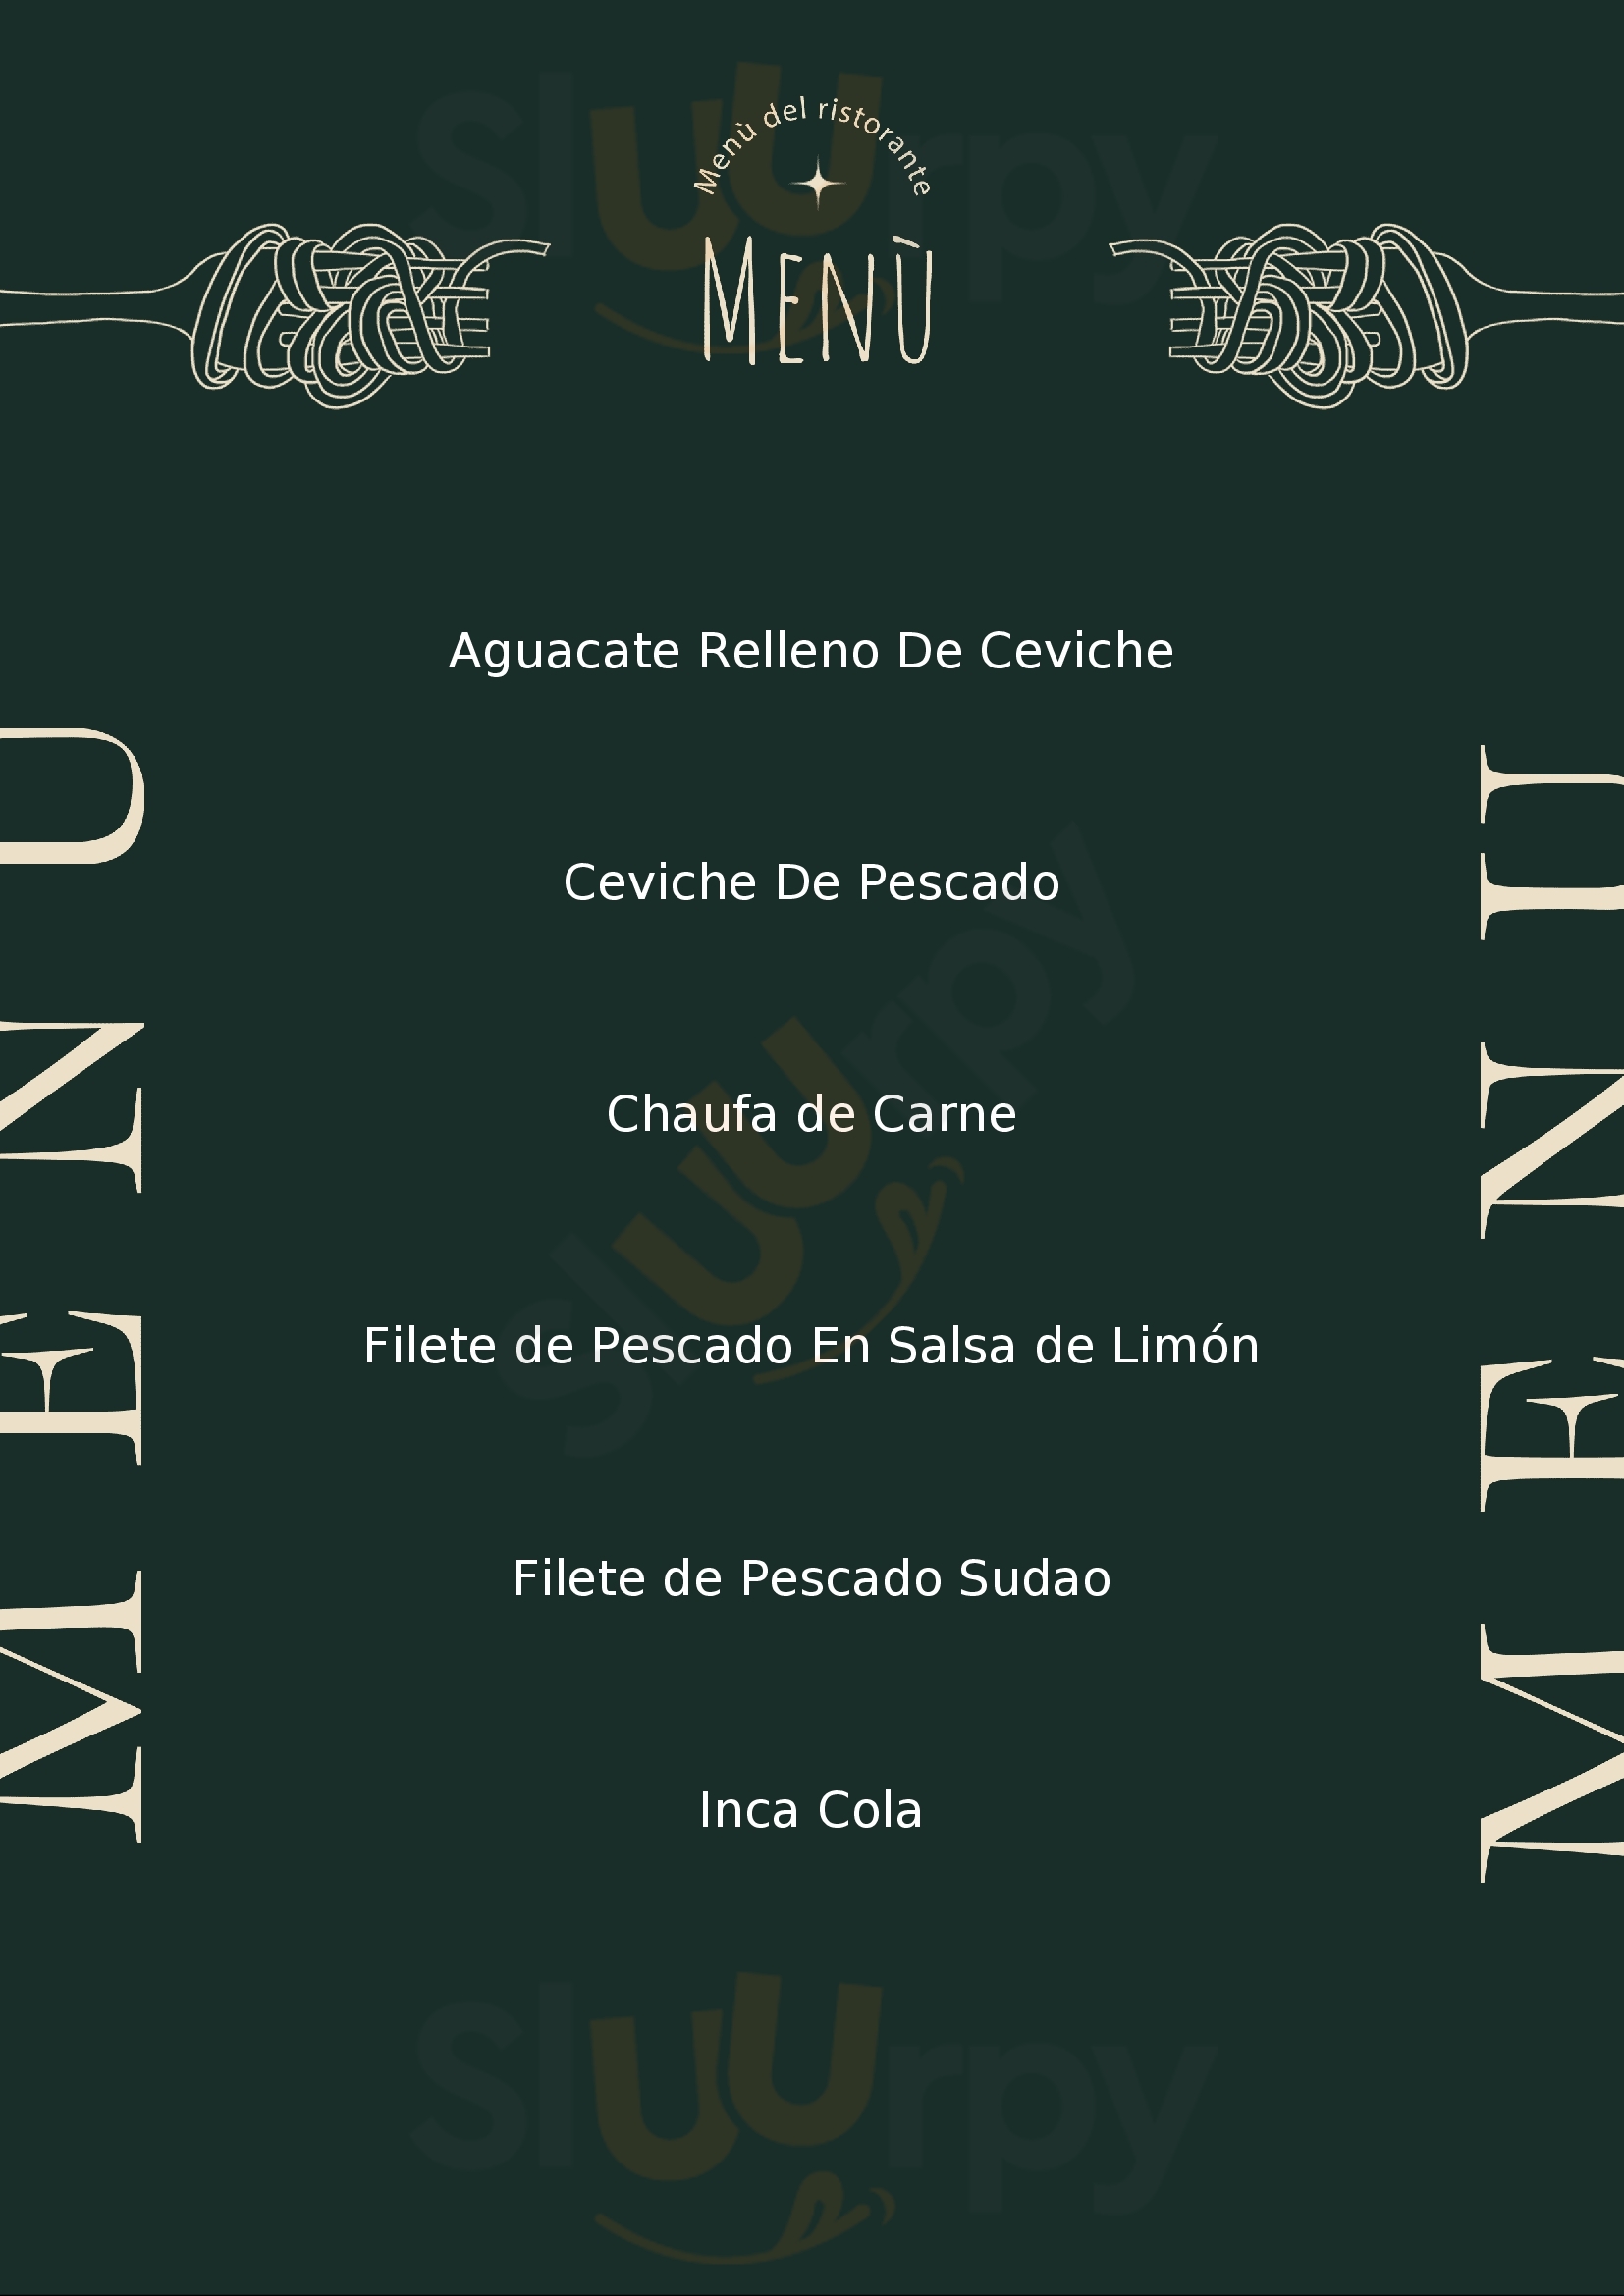 El Ceviche Del Rey San Juan Menu - 1